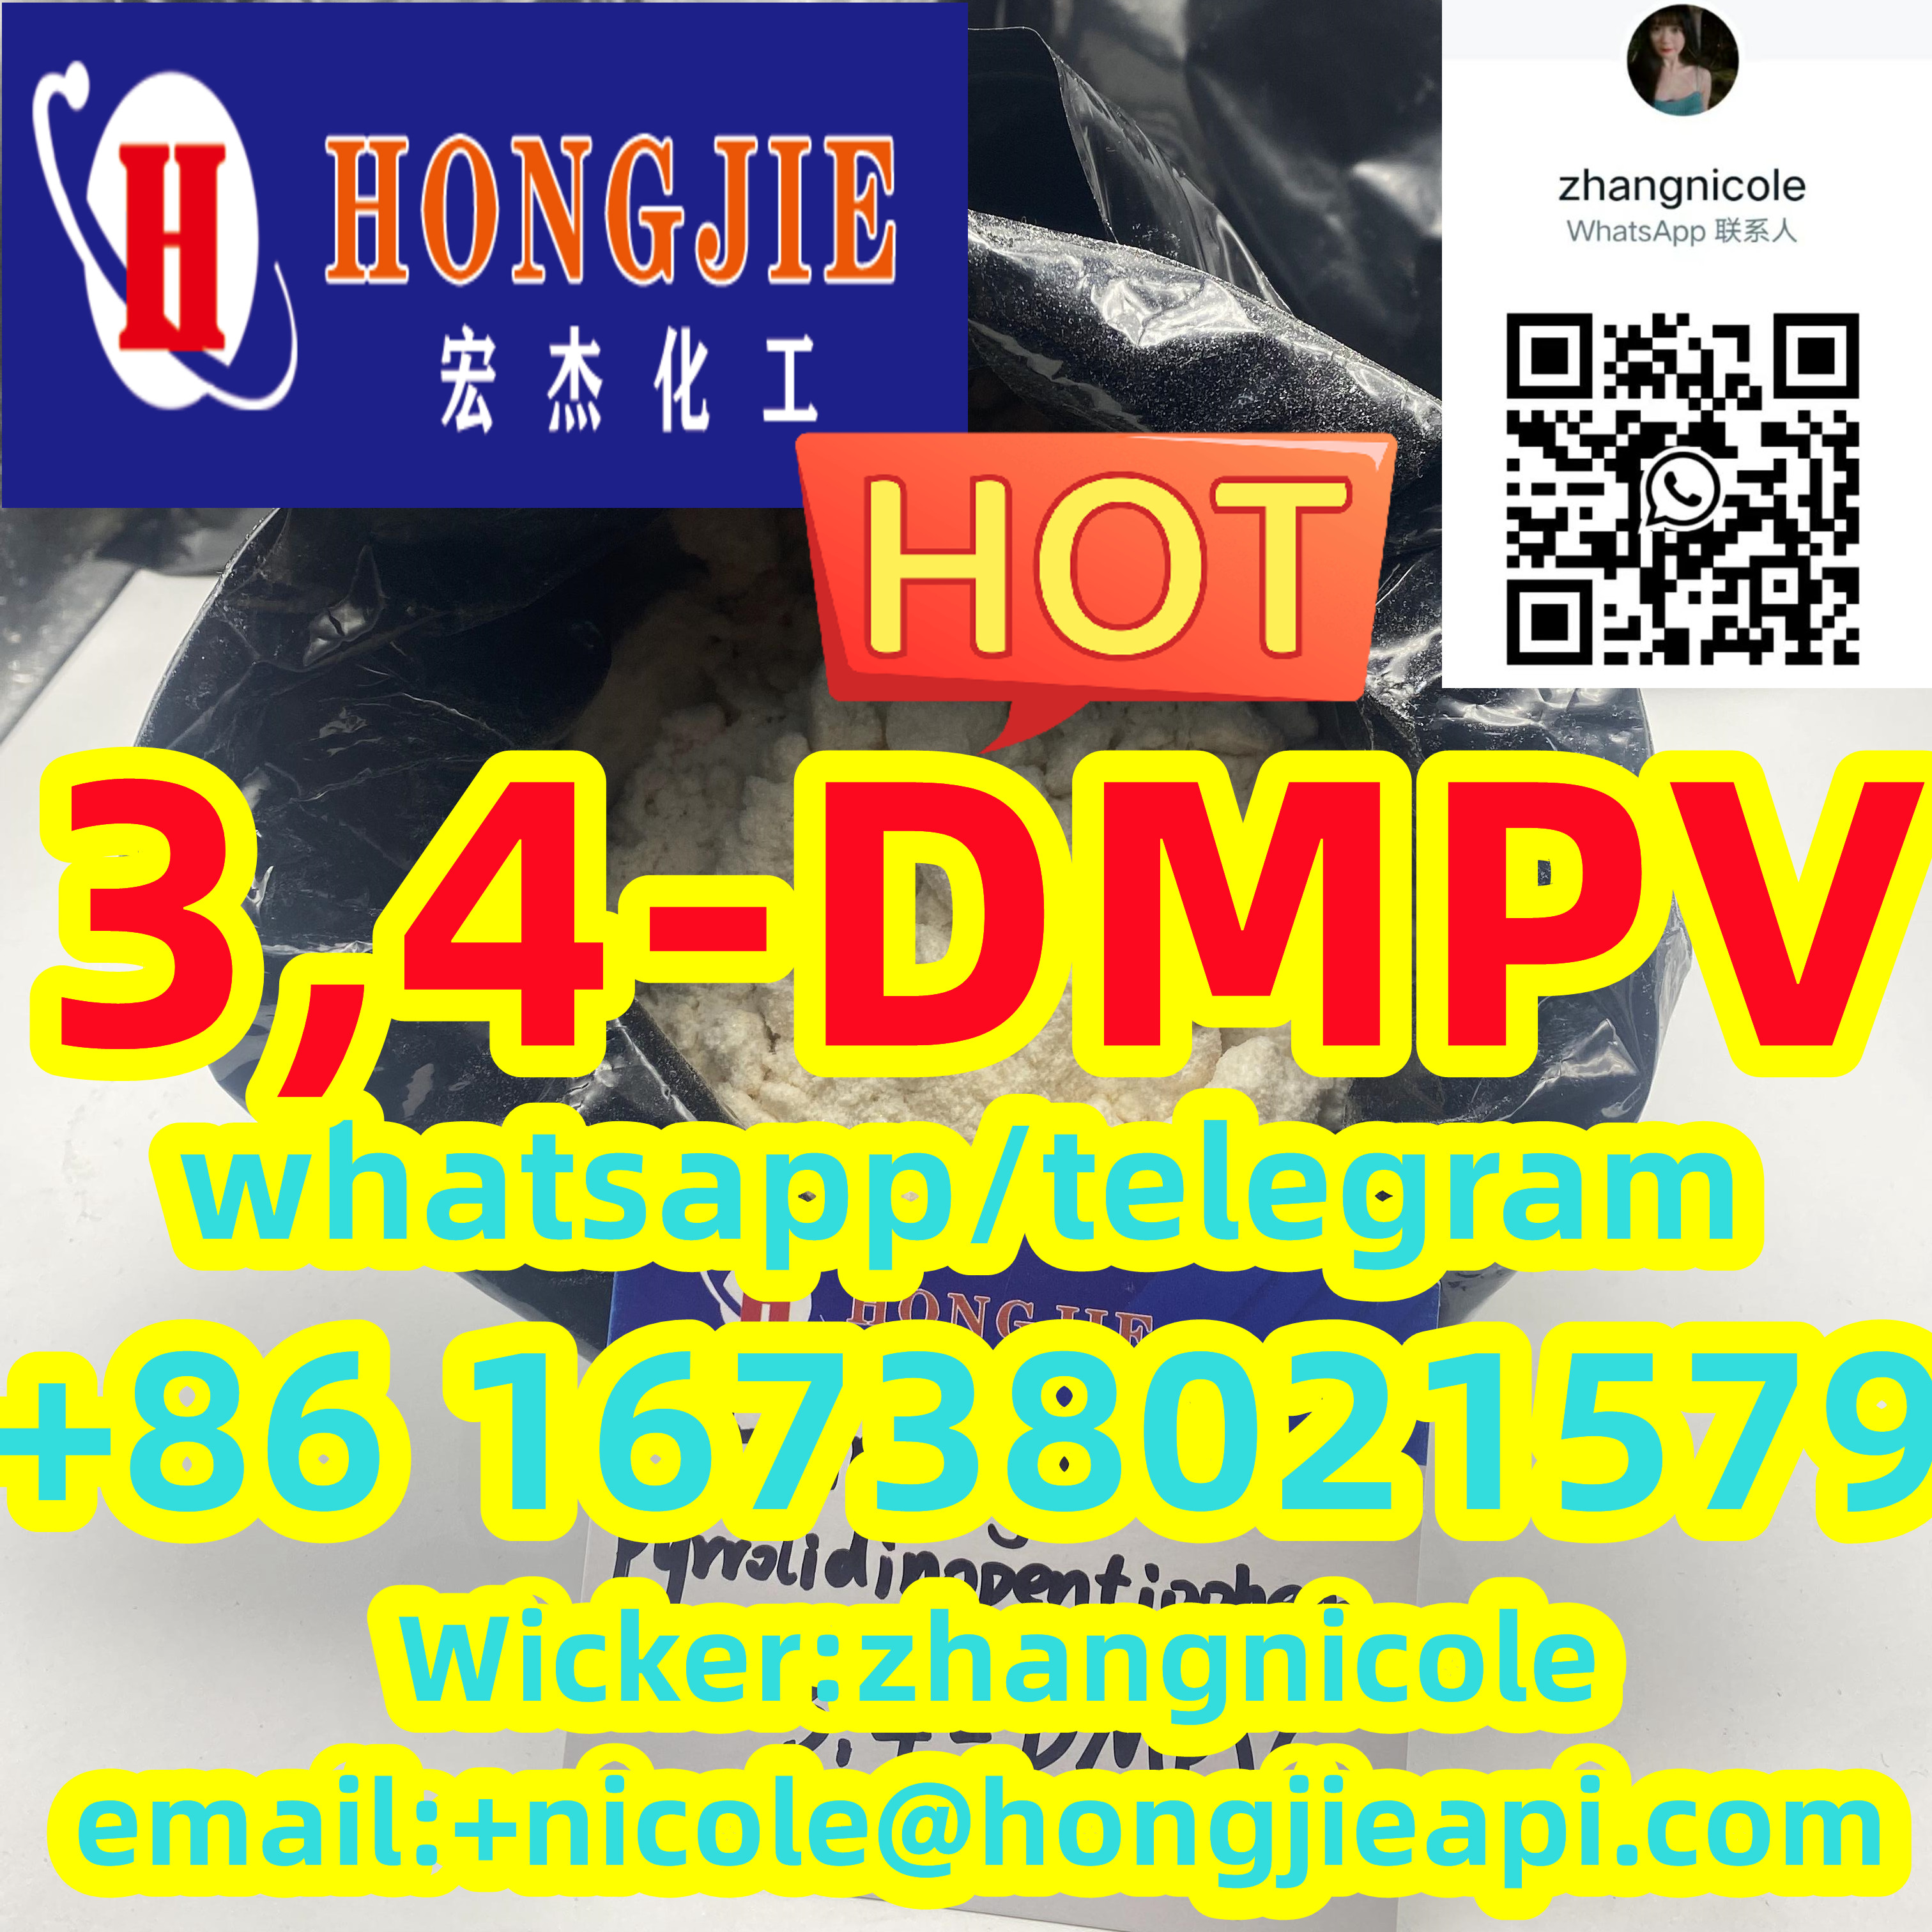 Low price 3,4-DMPV 3',4'-Dimethoxy-α-pyrrolidinopentiophenone 